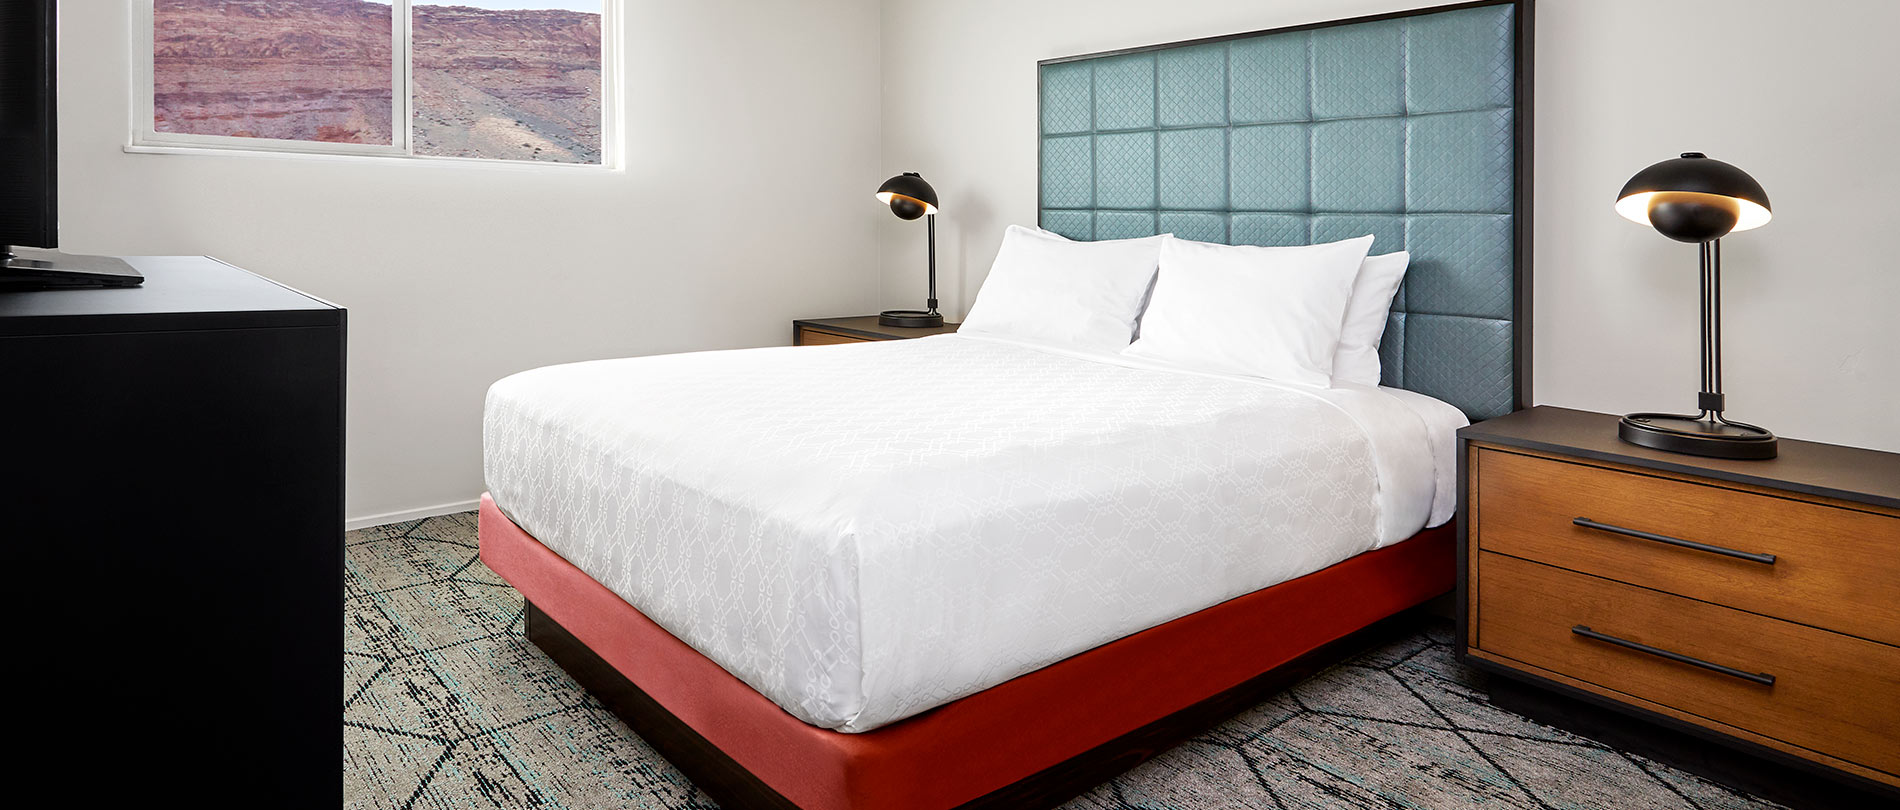 Bedroom - Worldmark Moab